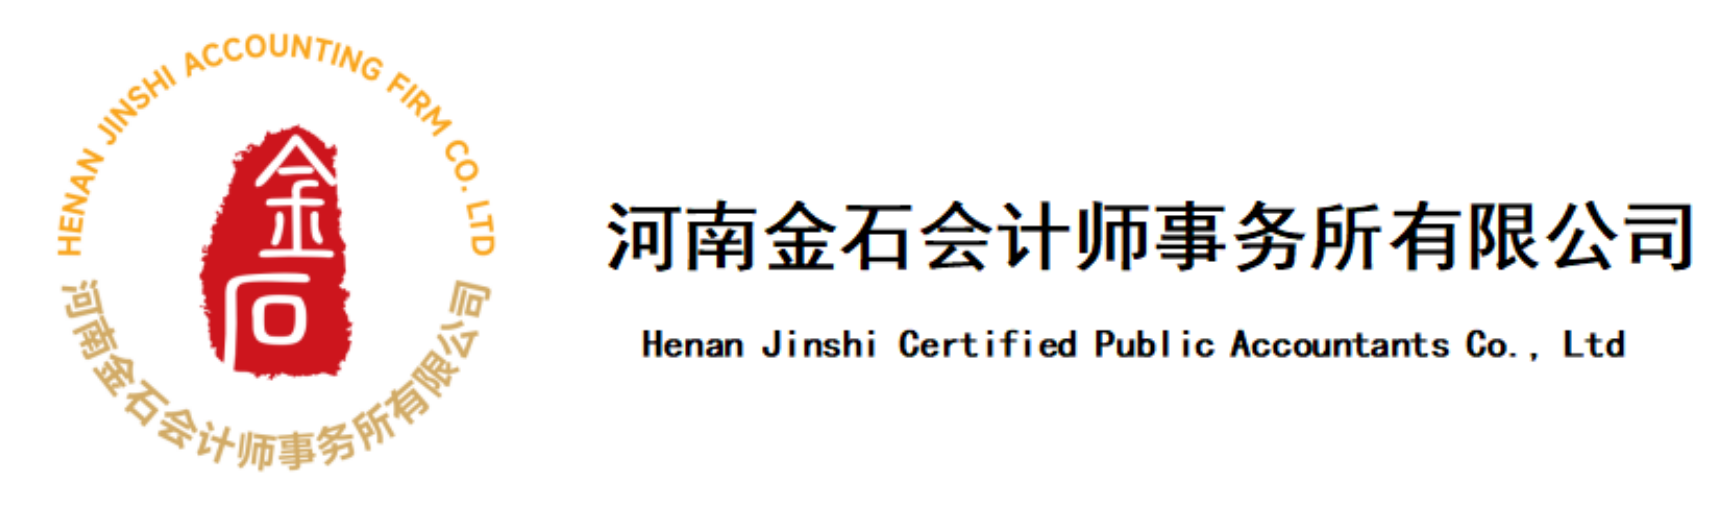 Henan Jinshi Accounting networks and Associations Co. , Ltd. 